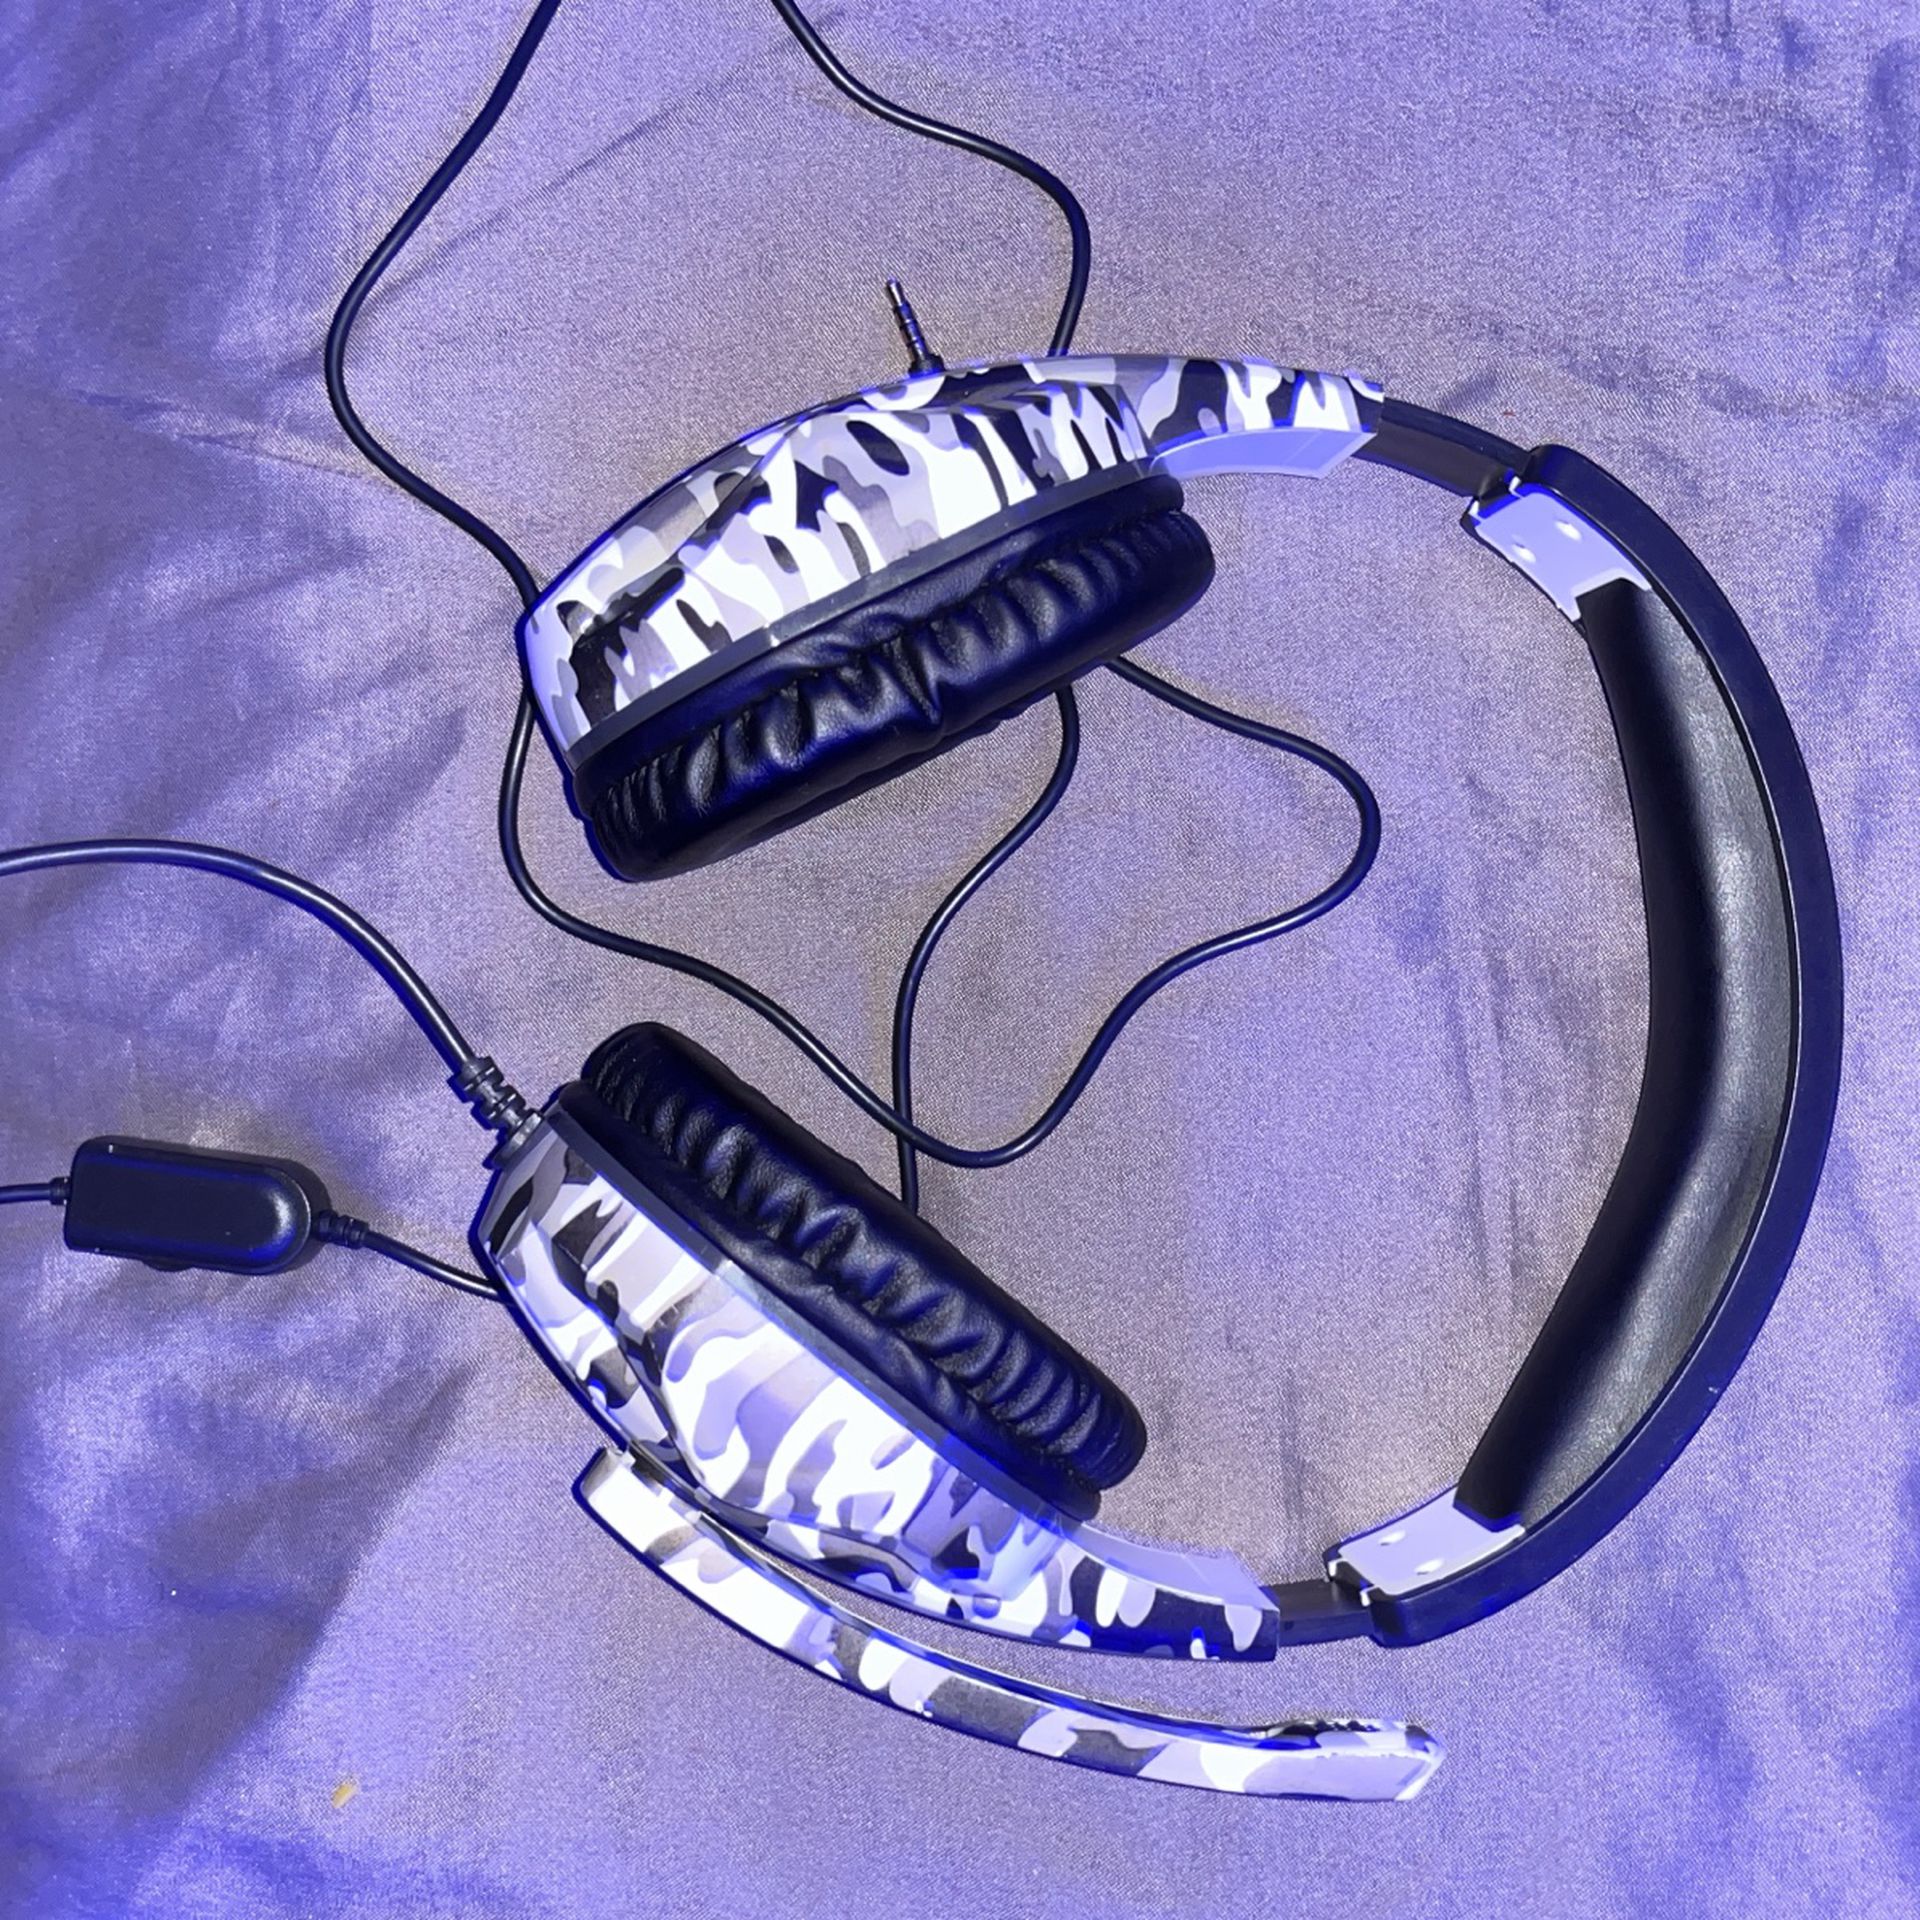 Gaming Headphones